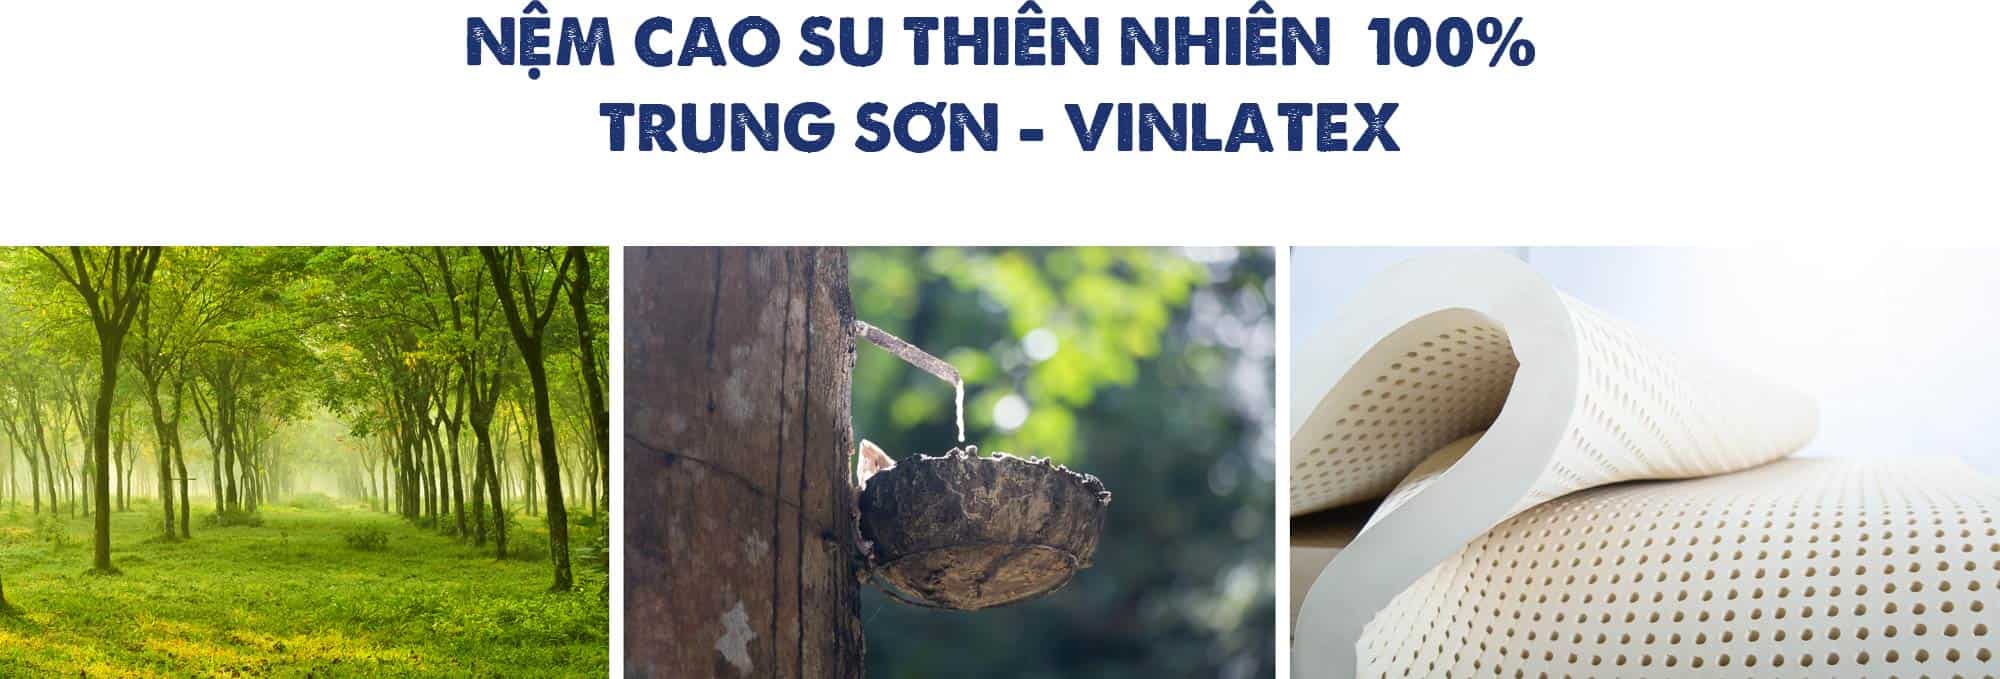 Nem cao su thien nhien VinLatex - Trung Sơn 4